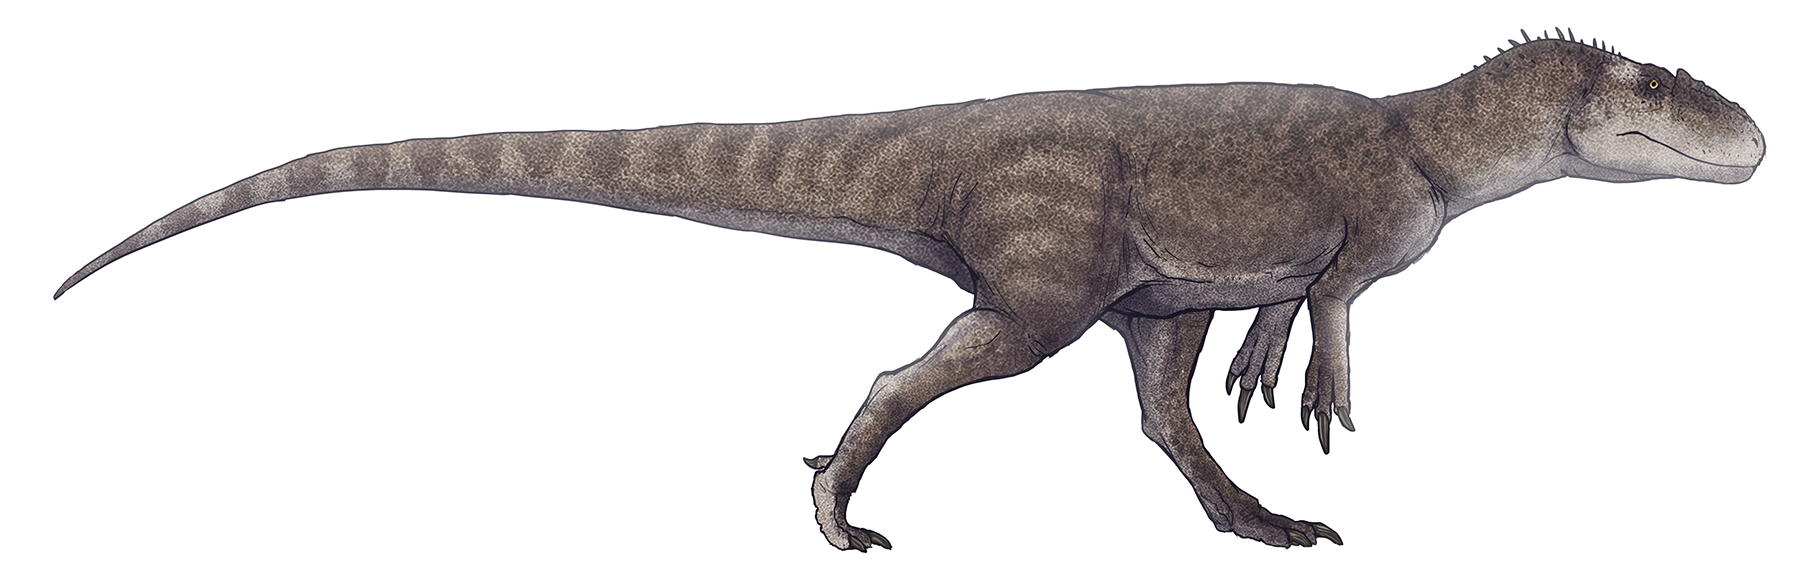 https://upload.wikimedia.org/wikipedia/commons/9/9f/Gasosaurus_constructus.png